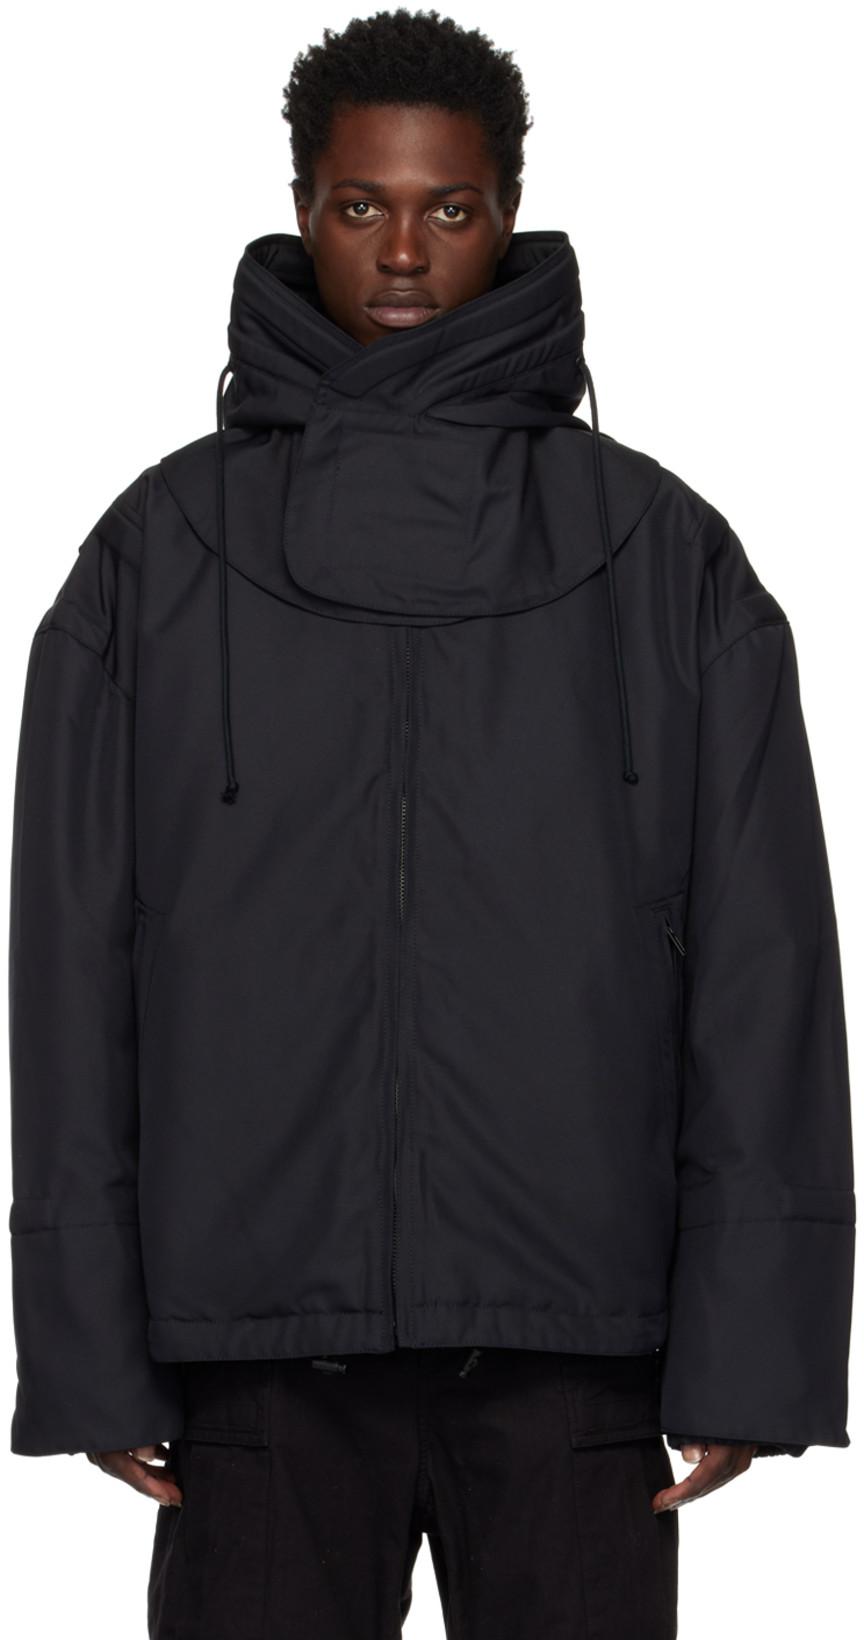 Black Padded Jacket by 032C